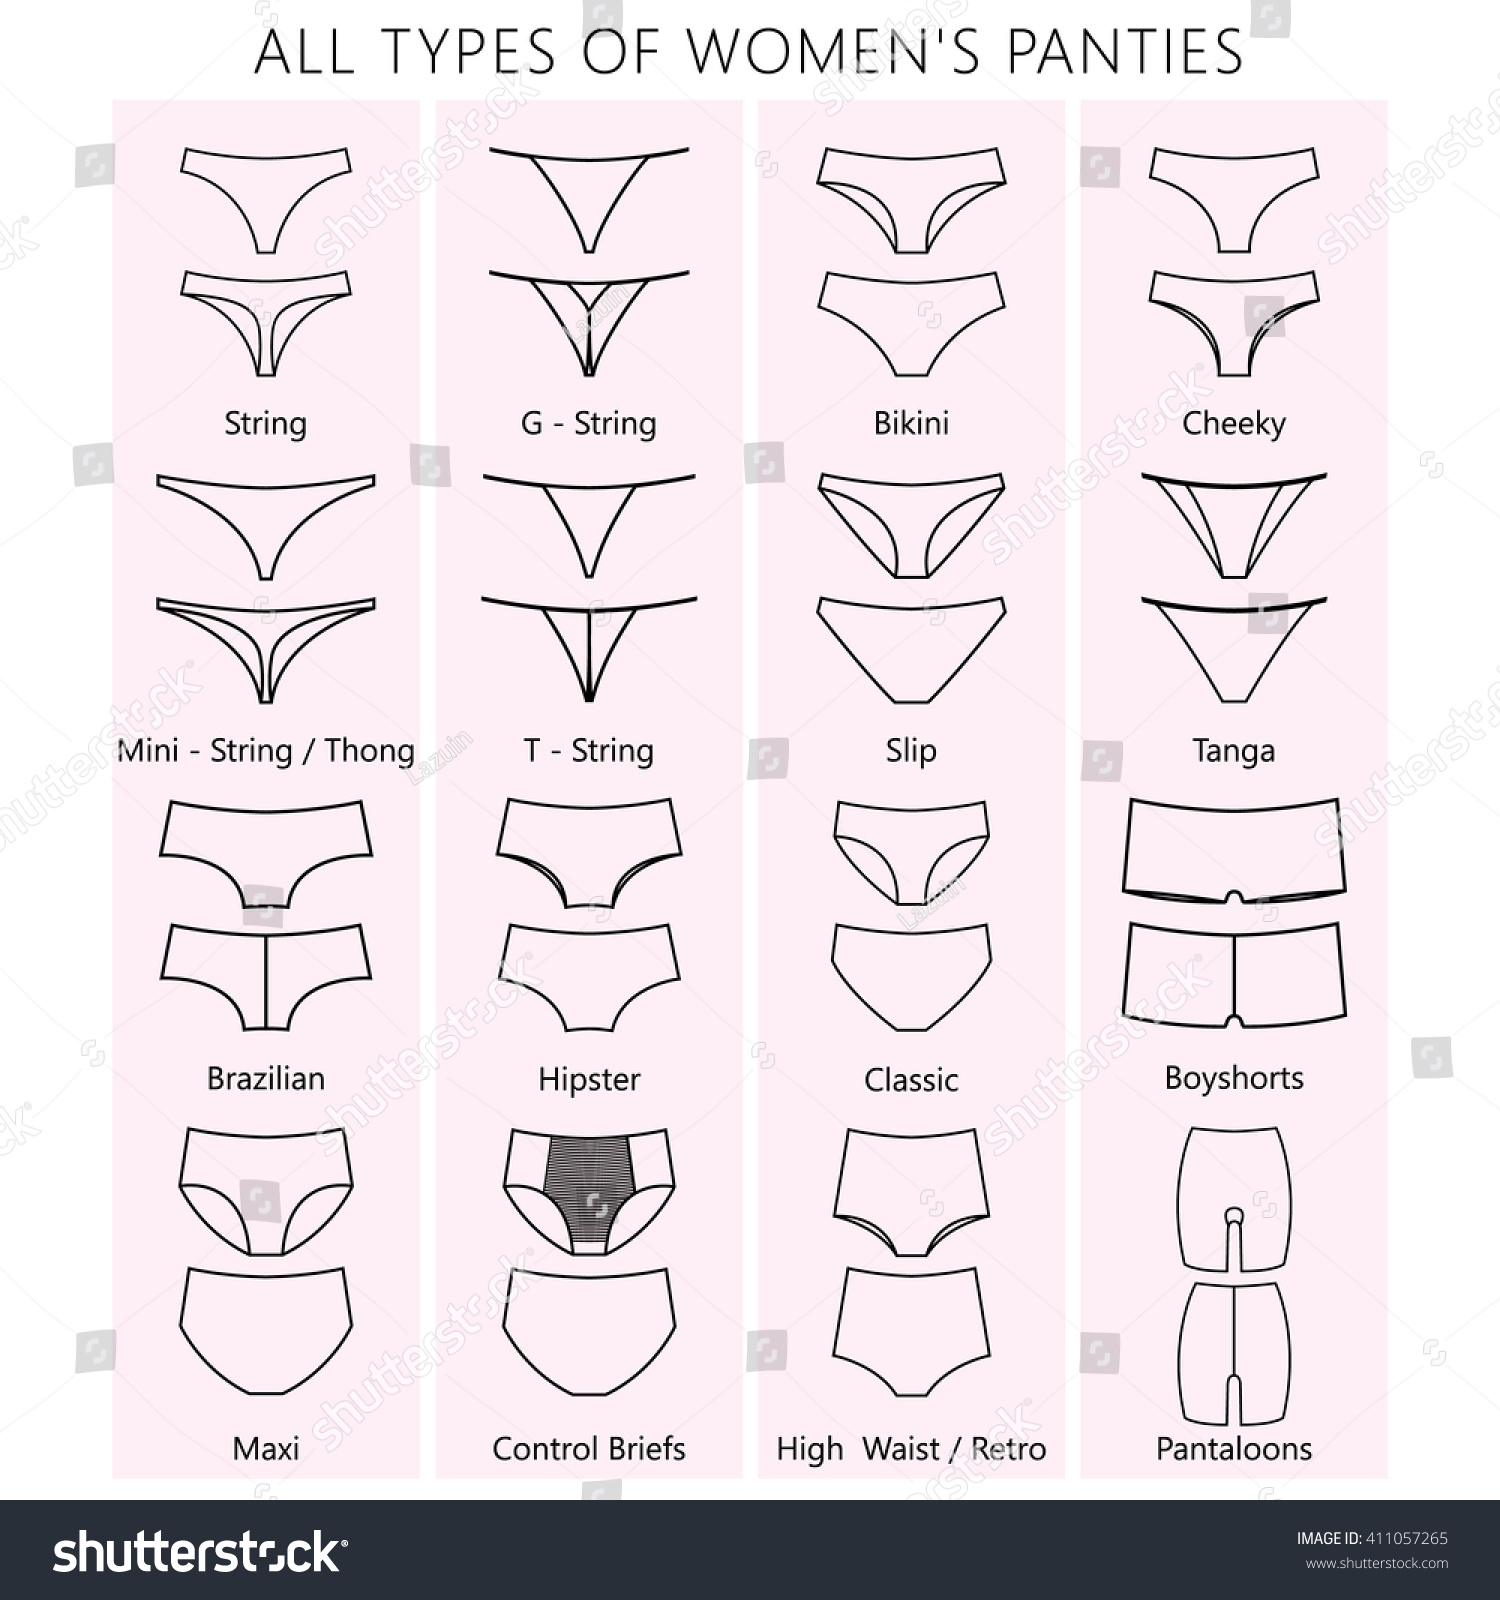 All Types Of Panties 20